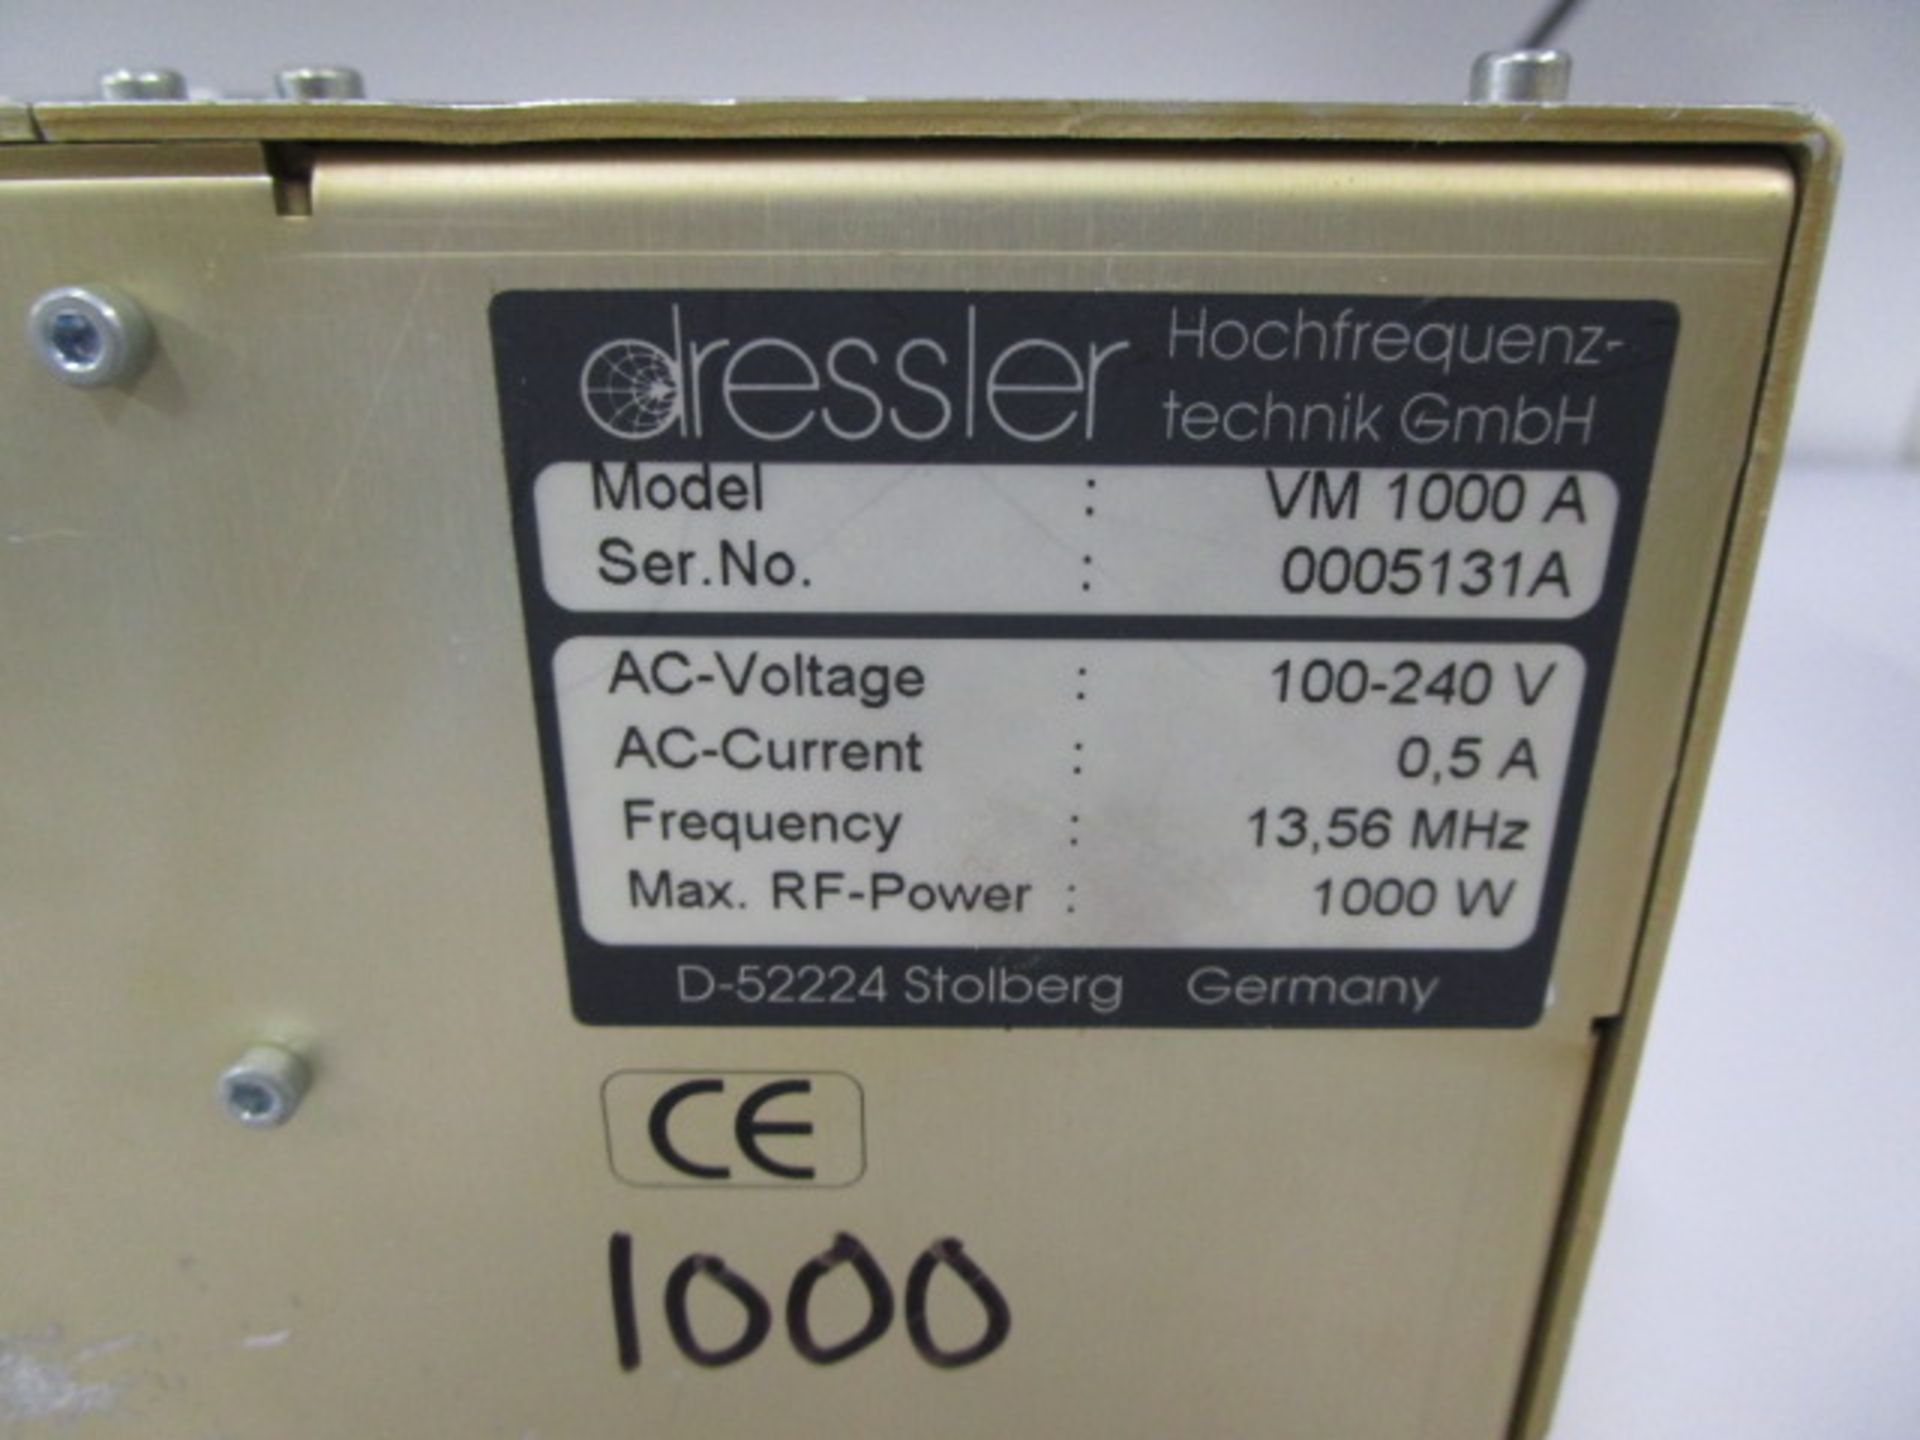 DRESSLER MODEL VM 1000 A, 1000W, 13.56MHZ RF POWER GENERATOR - Image 3 of 5